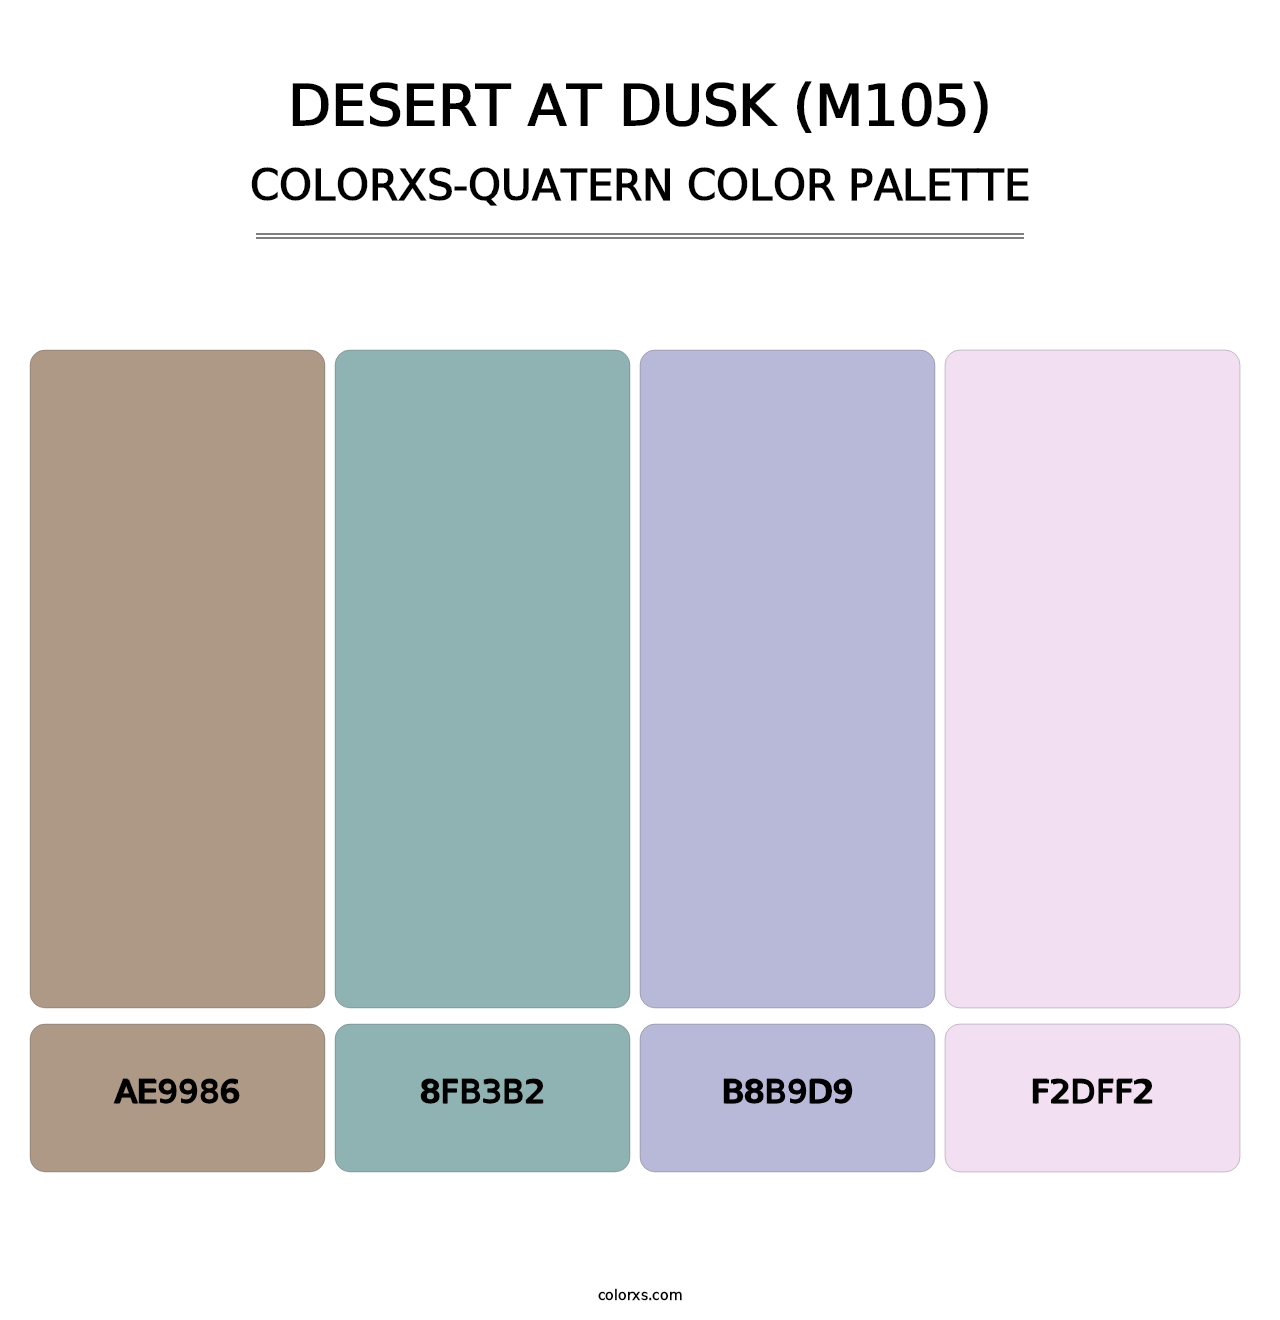 Desert at Dusk (M105) - Colorxs Quatern Palette